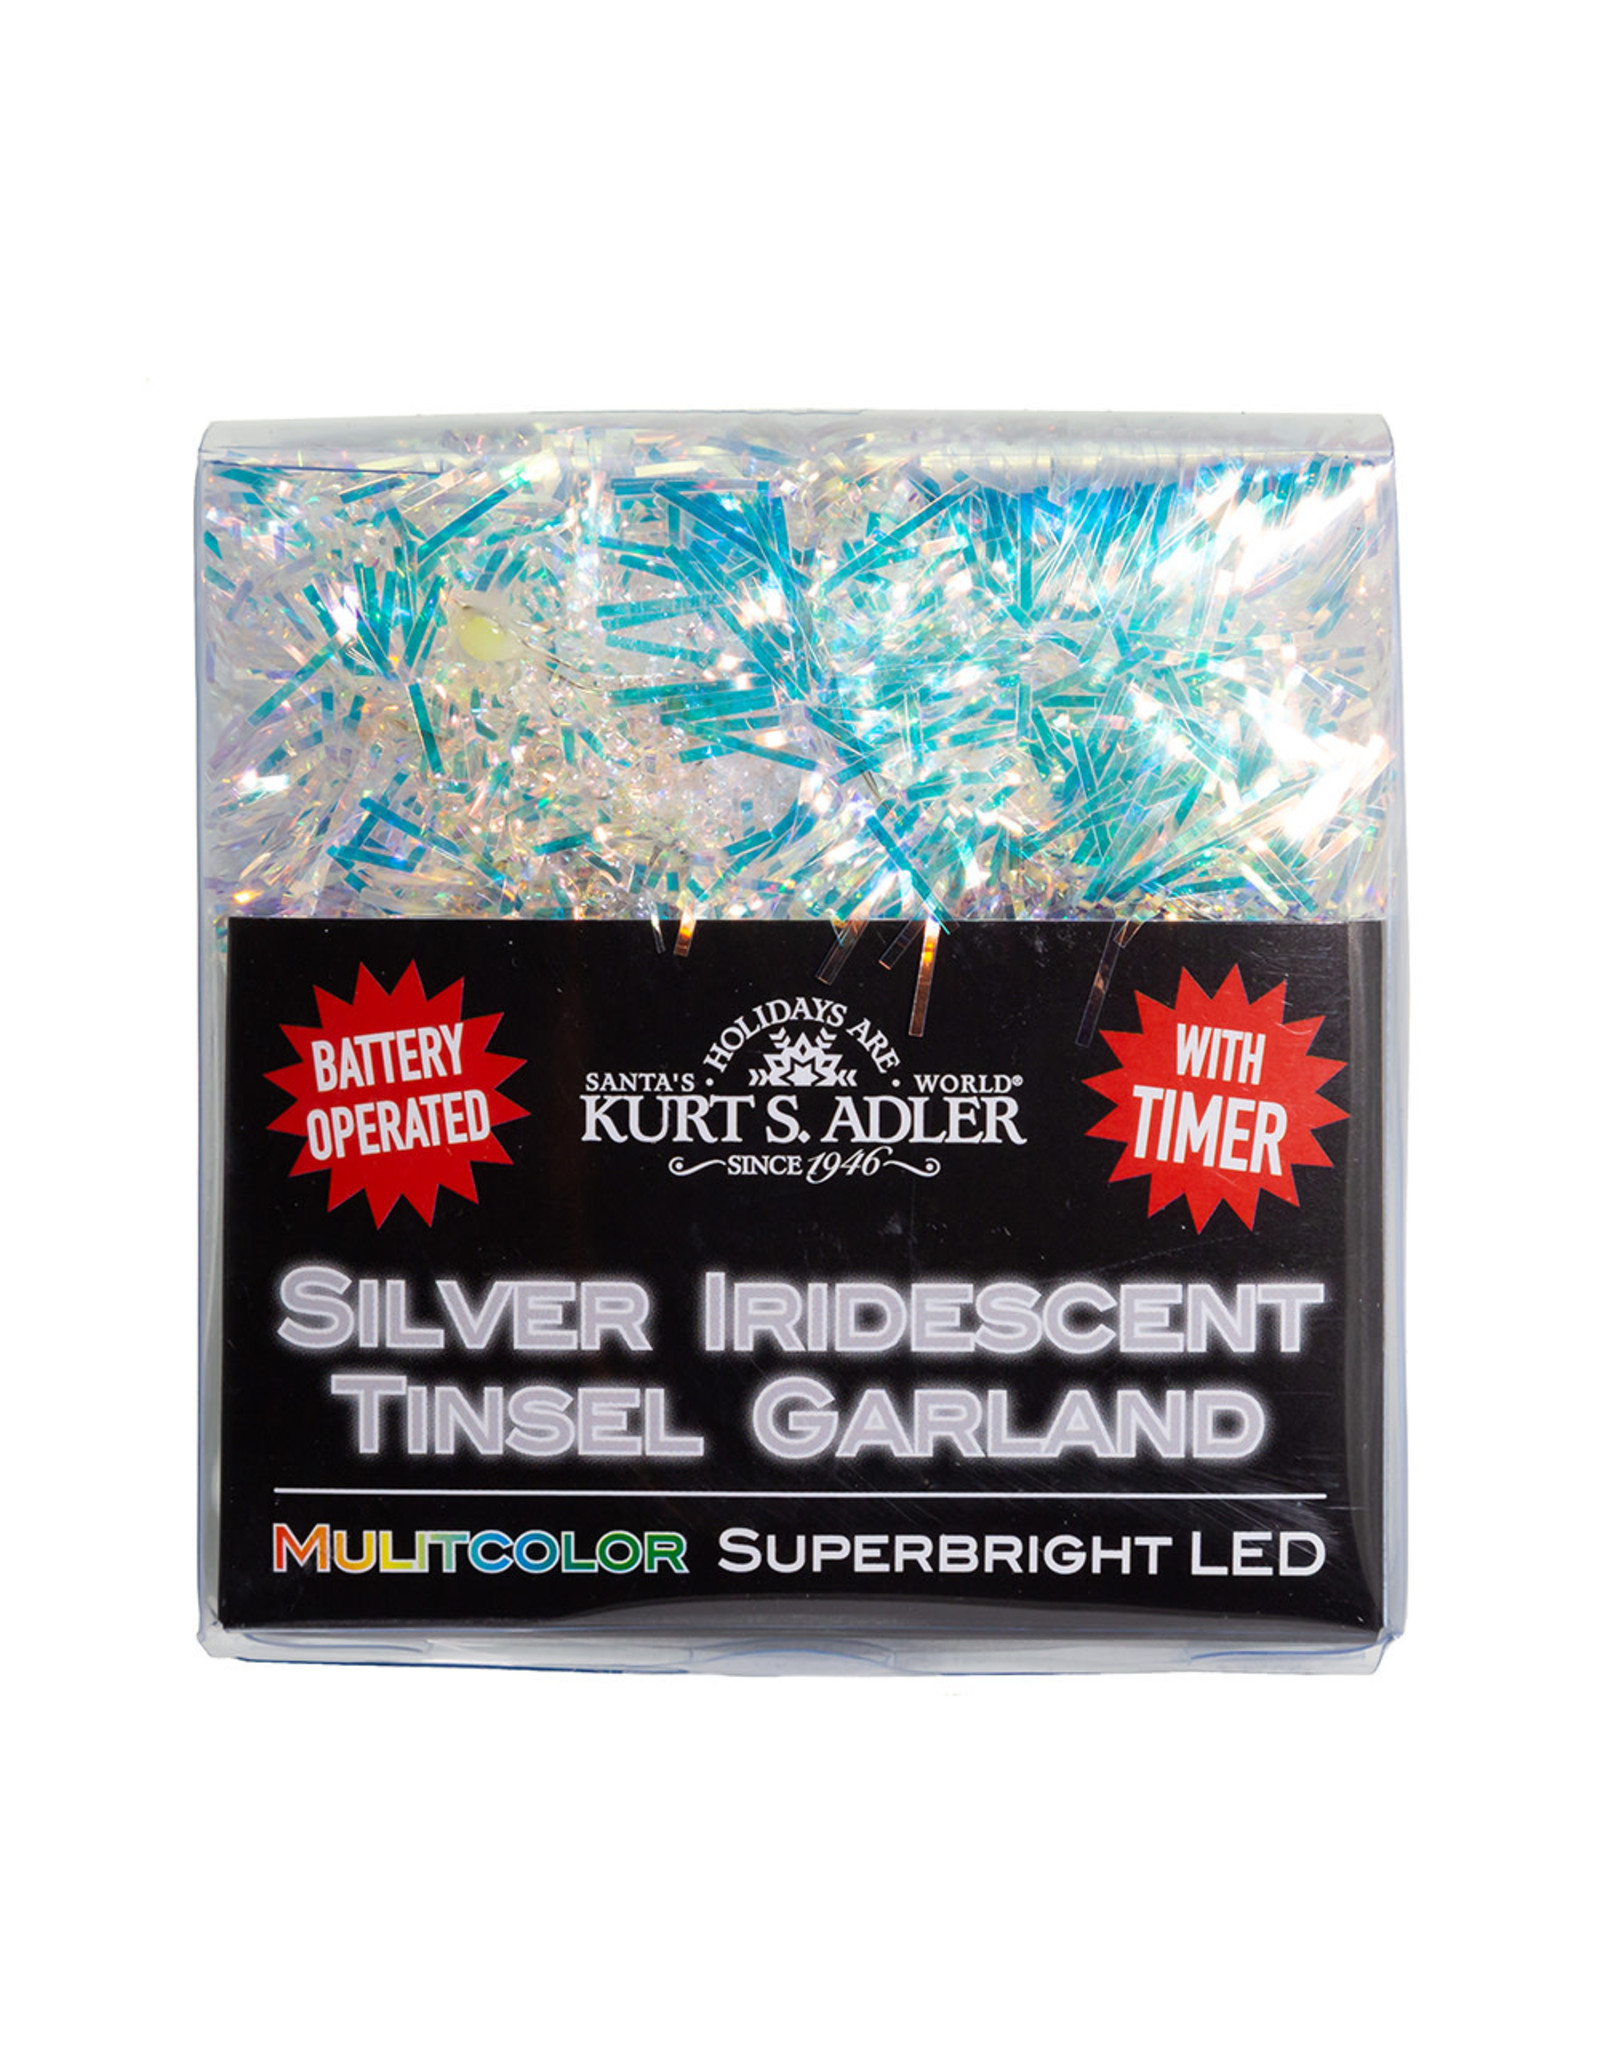 Kurt Adler Silver Iridescent Tinsel Garland 20L Bright LED Multicolor